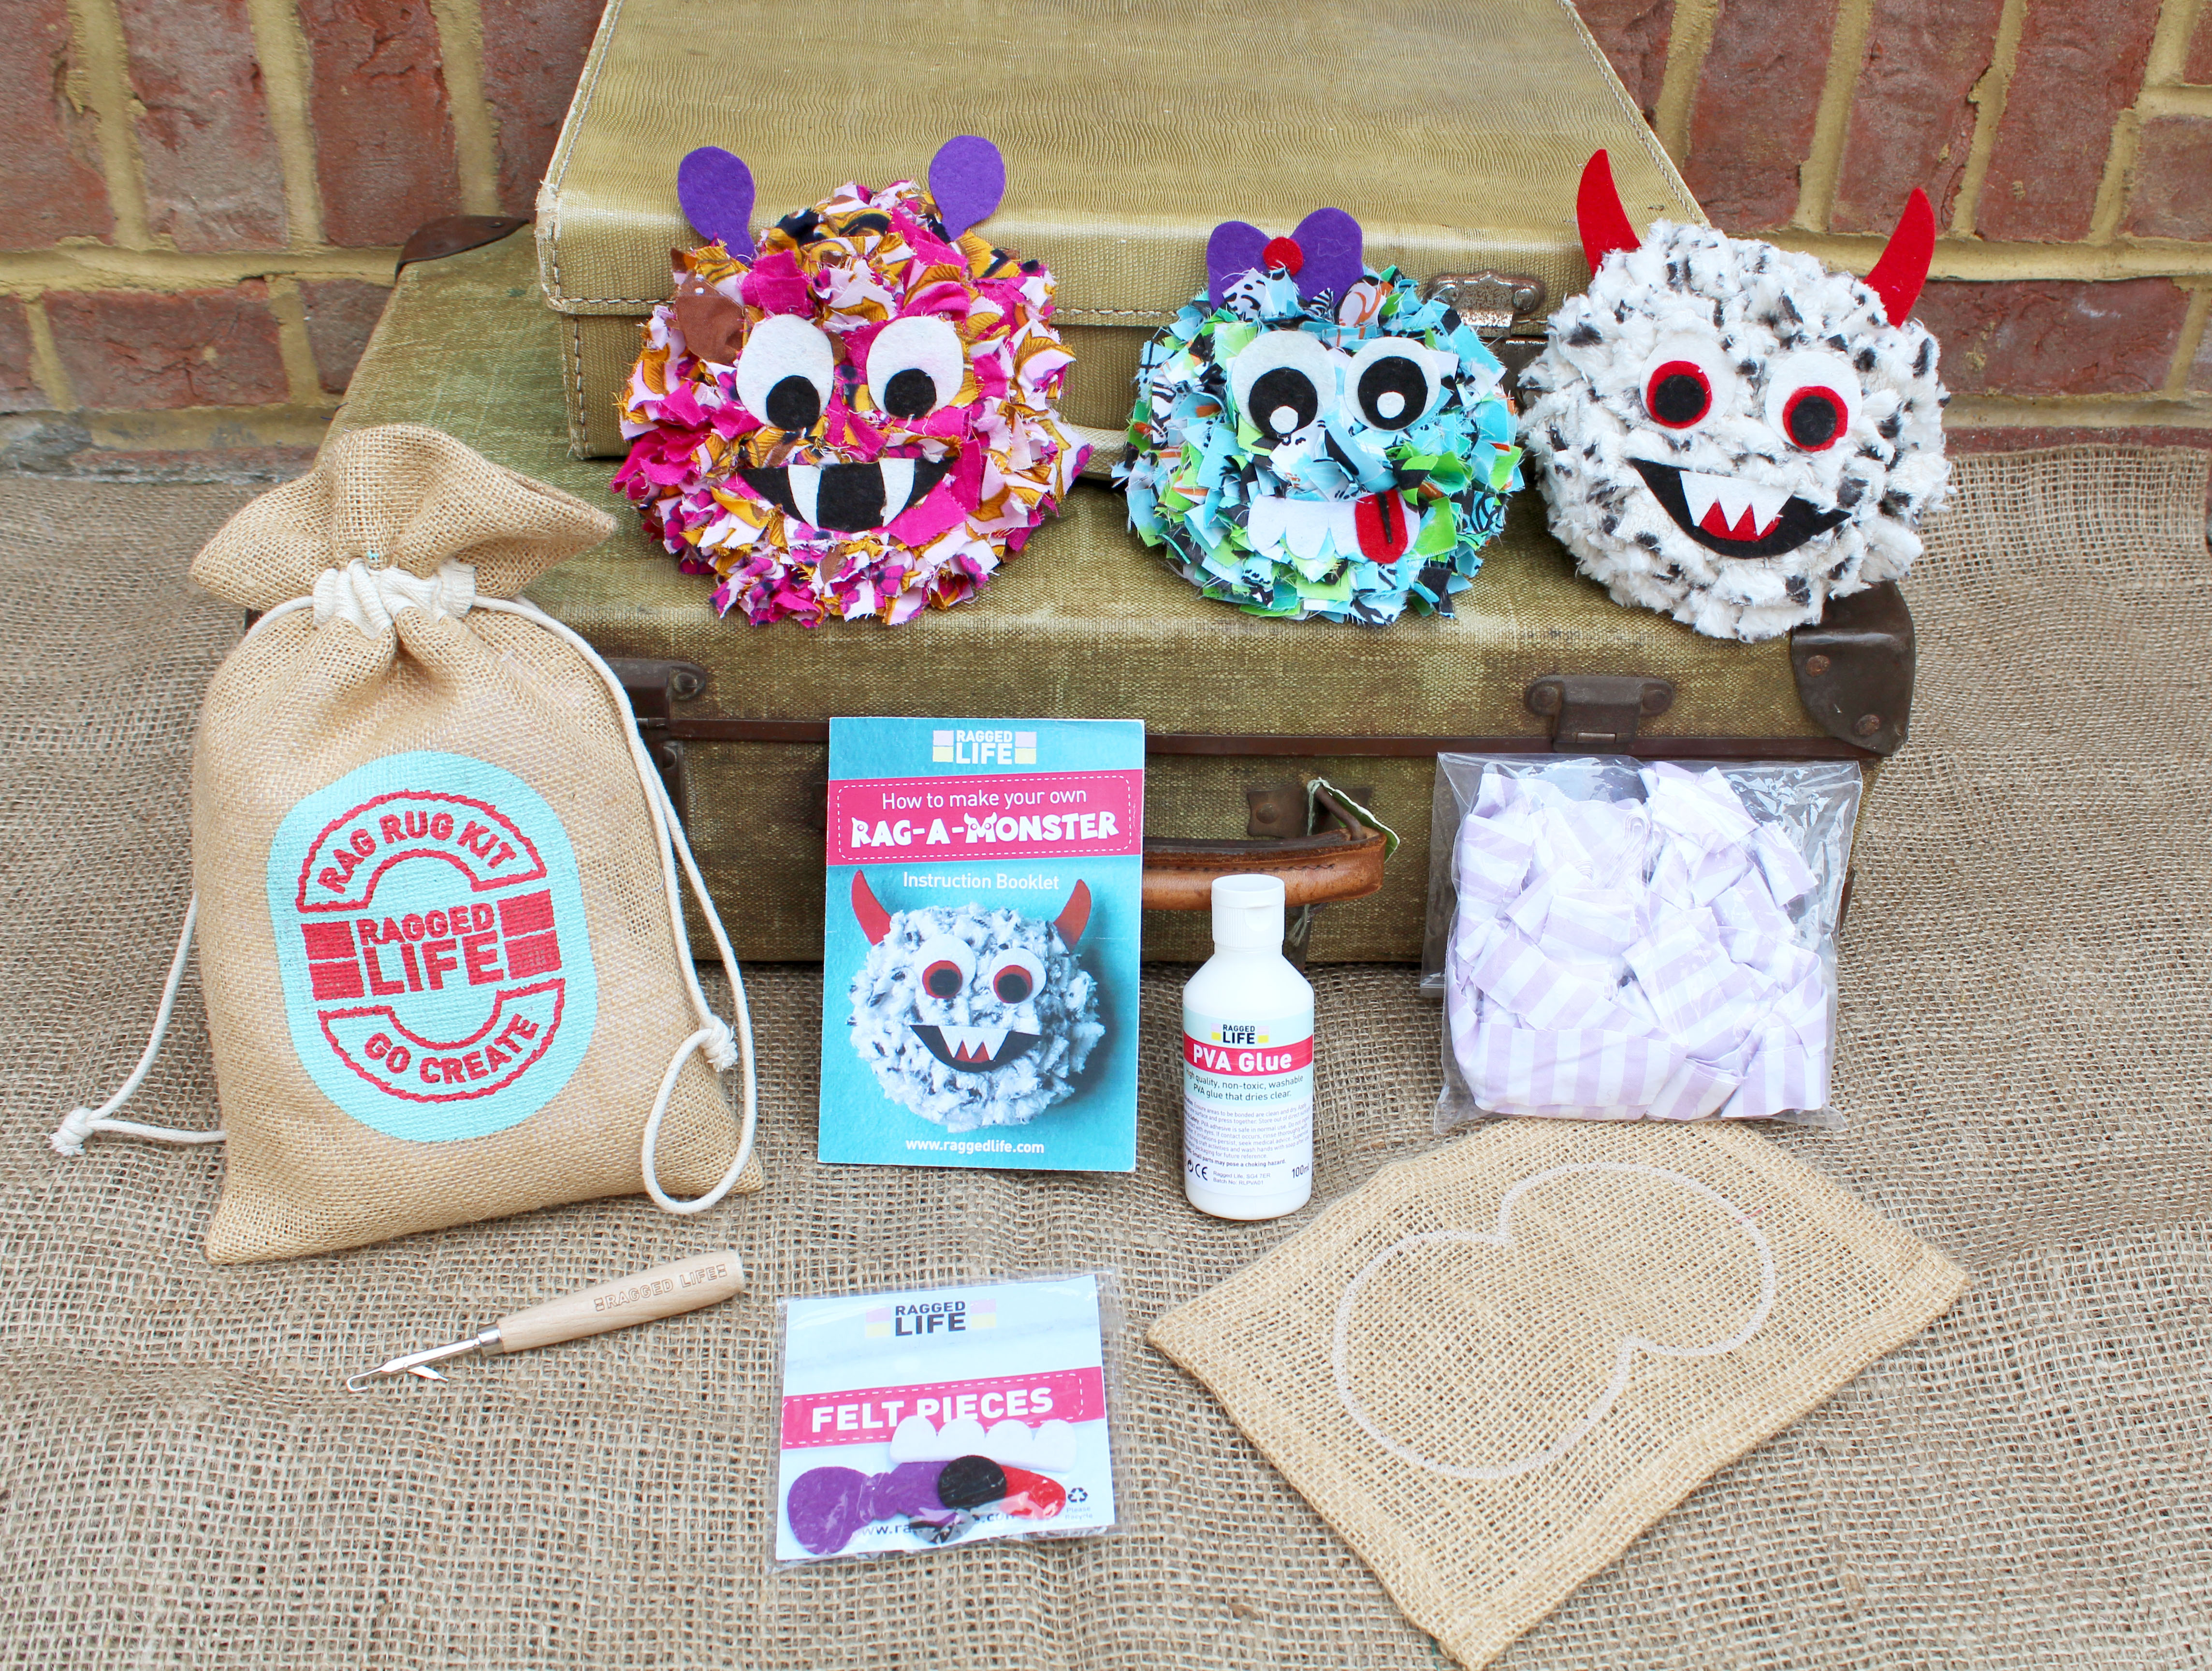 Ragged Life Children's Fabric Craft Kit